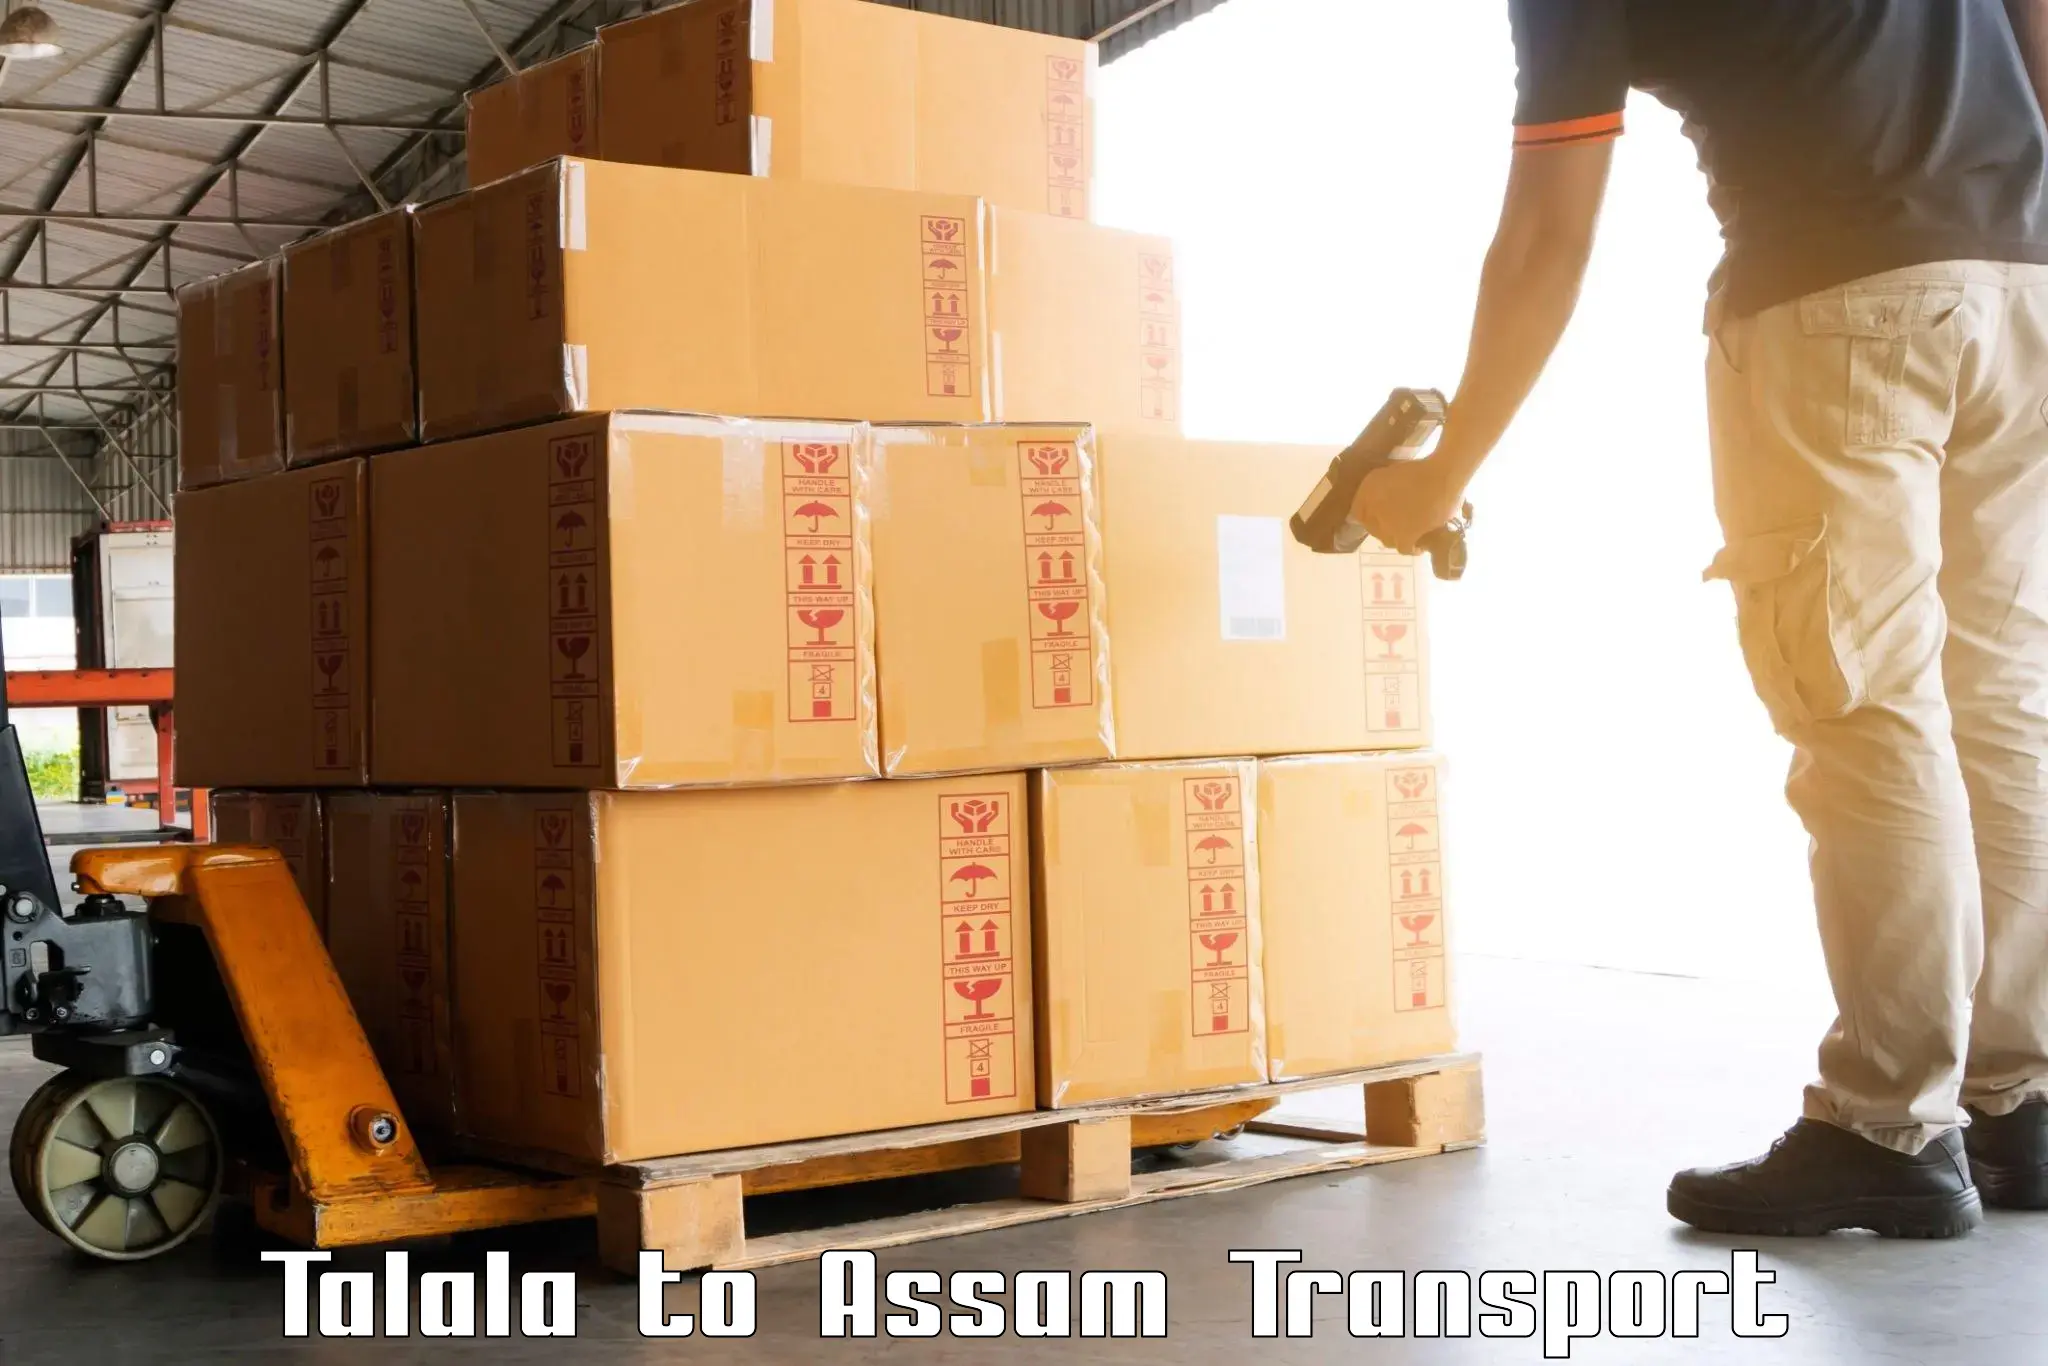 Transport shared services Talala to Nagaon